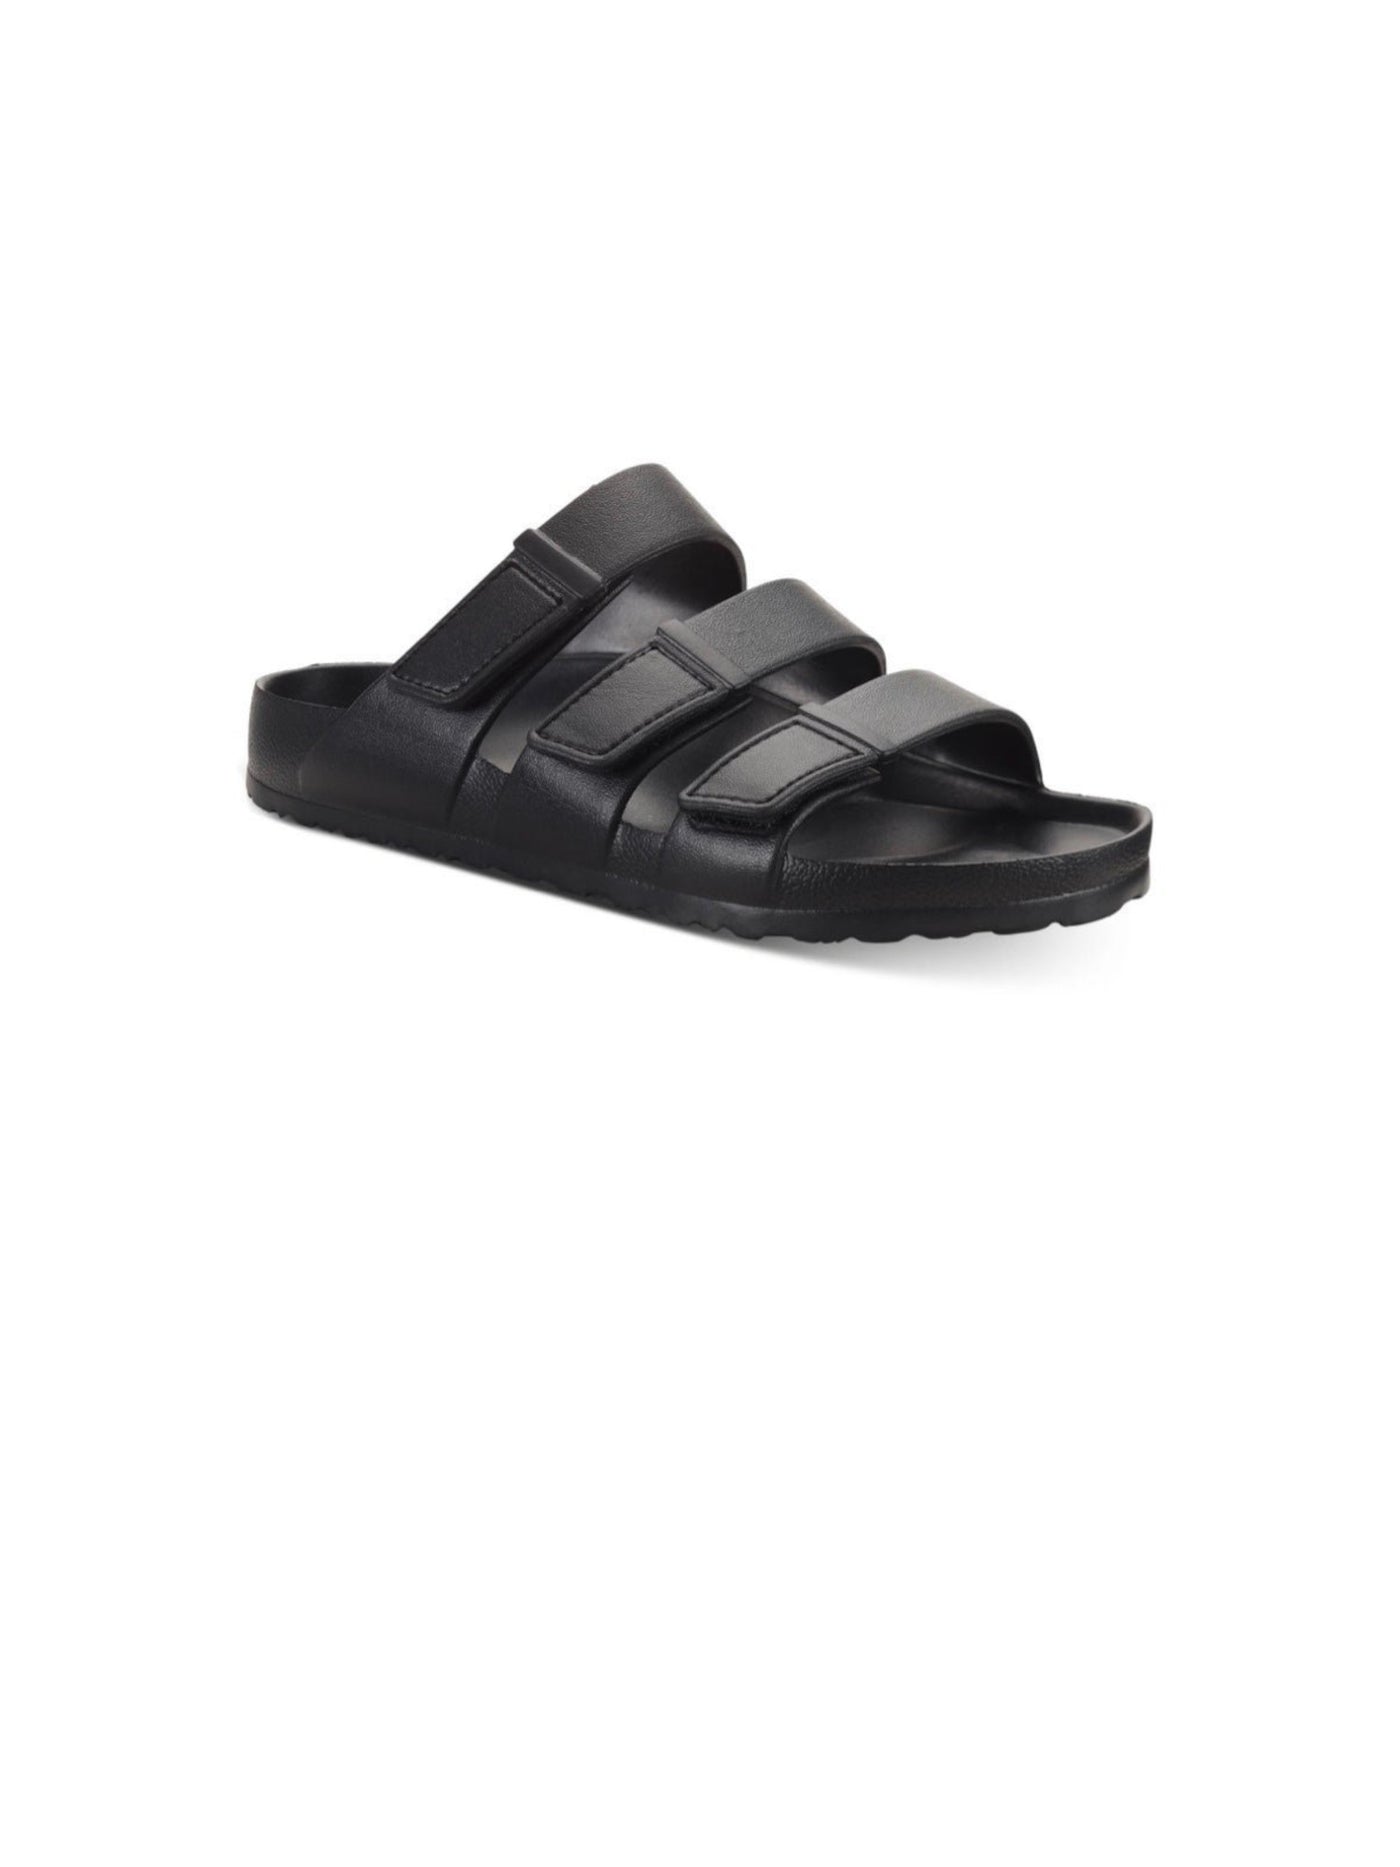 SUN STONE Mens Black Padded Adjustable Comfort Bowie Round Toe Slide Sandals Shoes 4 M